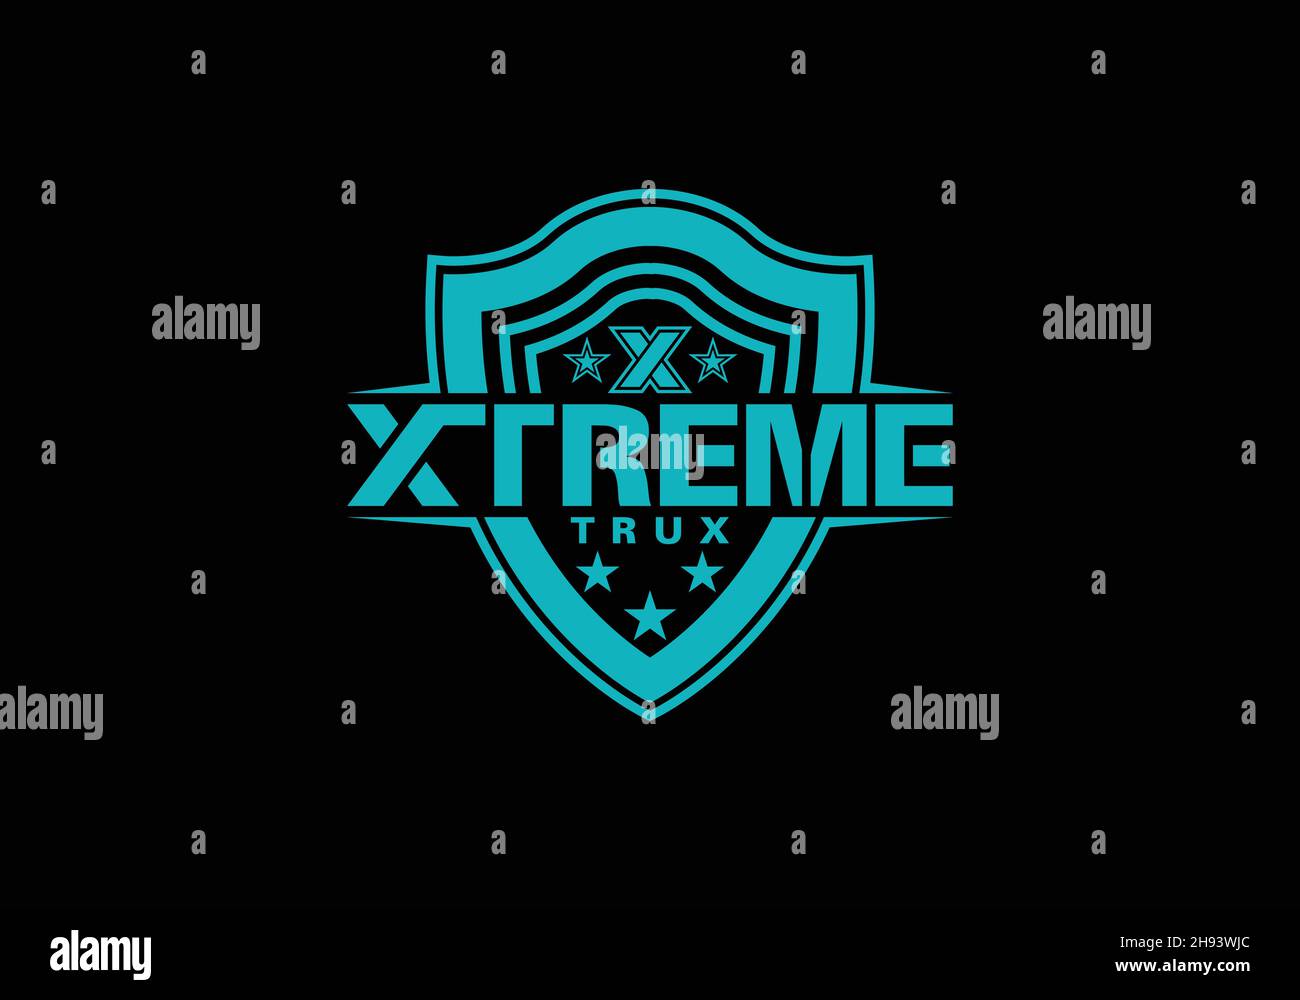 XTREME TRUX Word Mark Logo Design Vector Template xtreme trux Word Logo Design Stock Vector